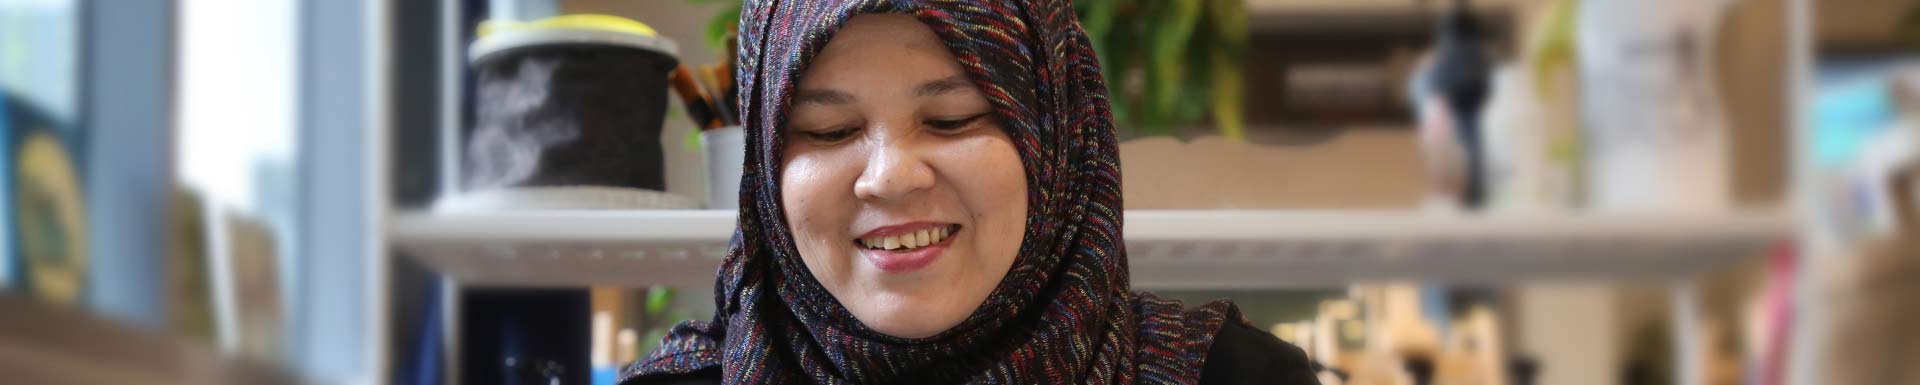 Woman wearing headscarf smiling